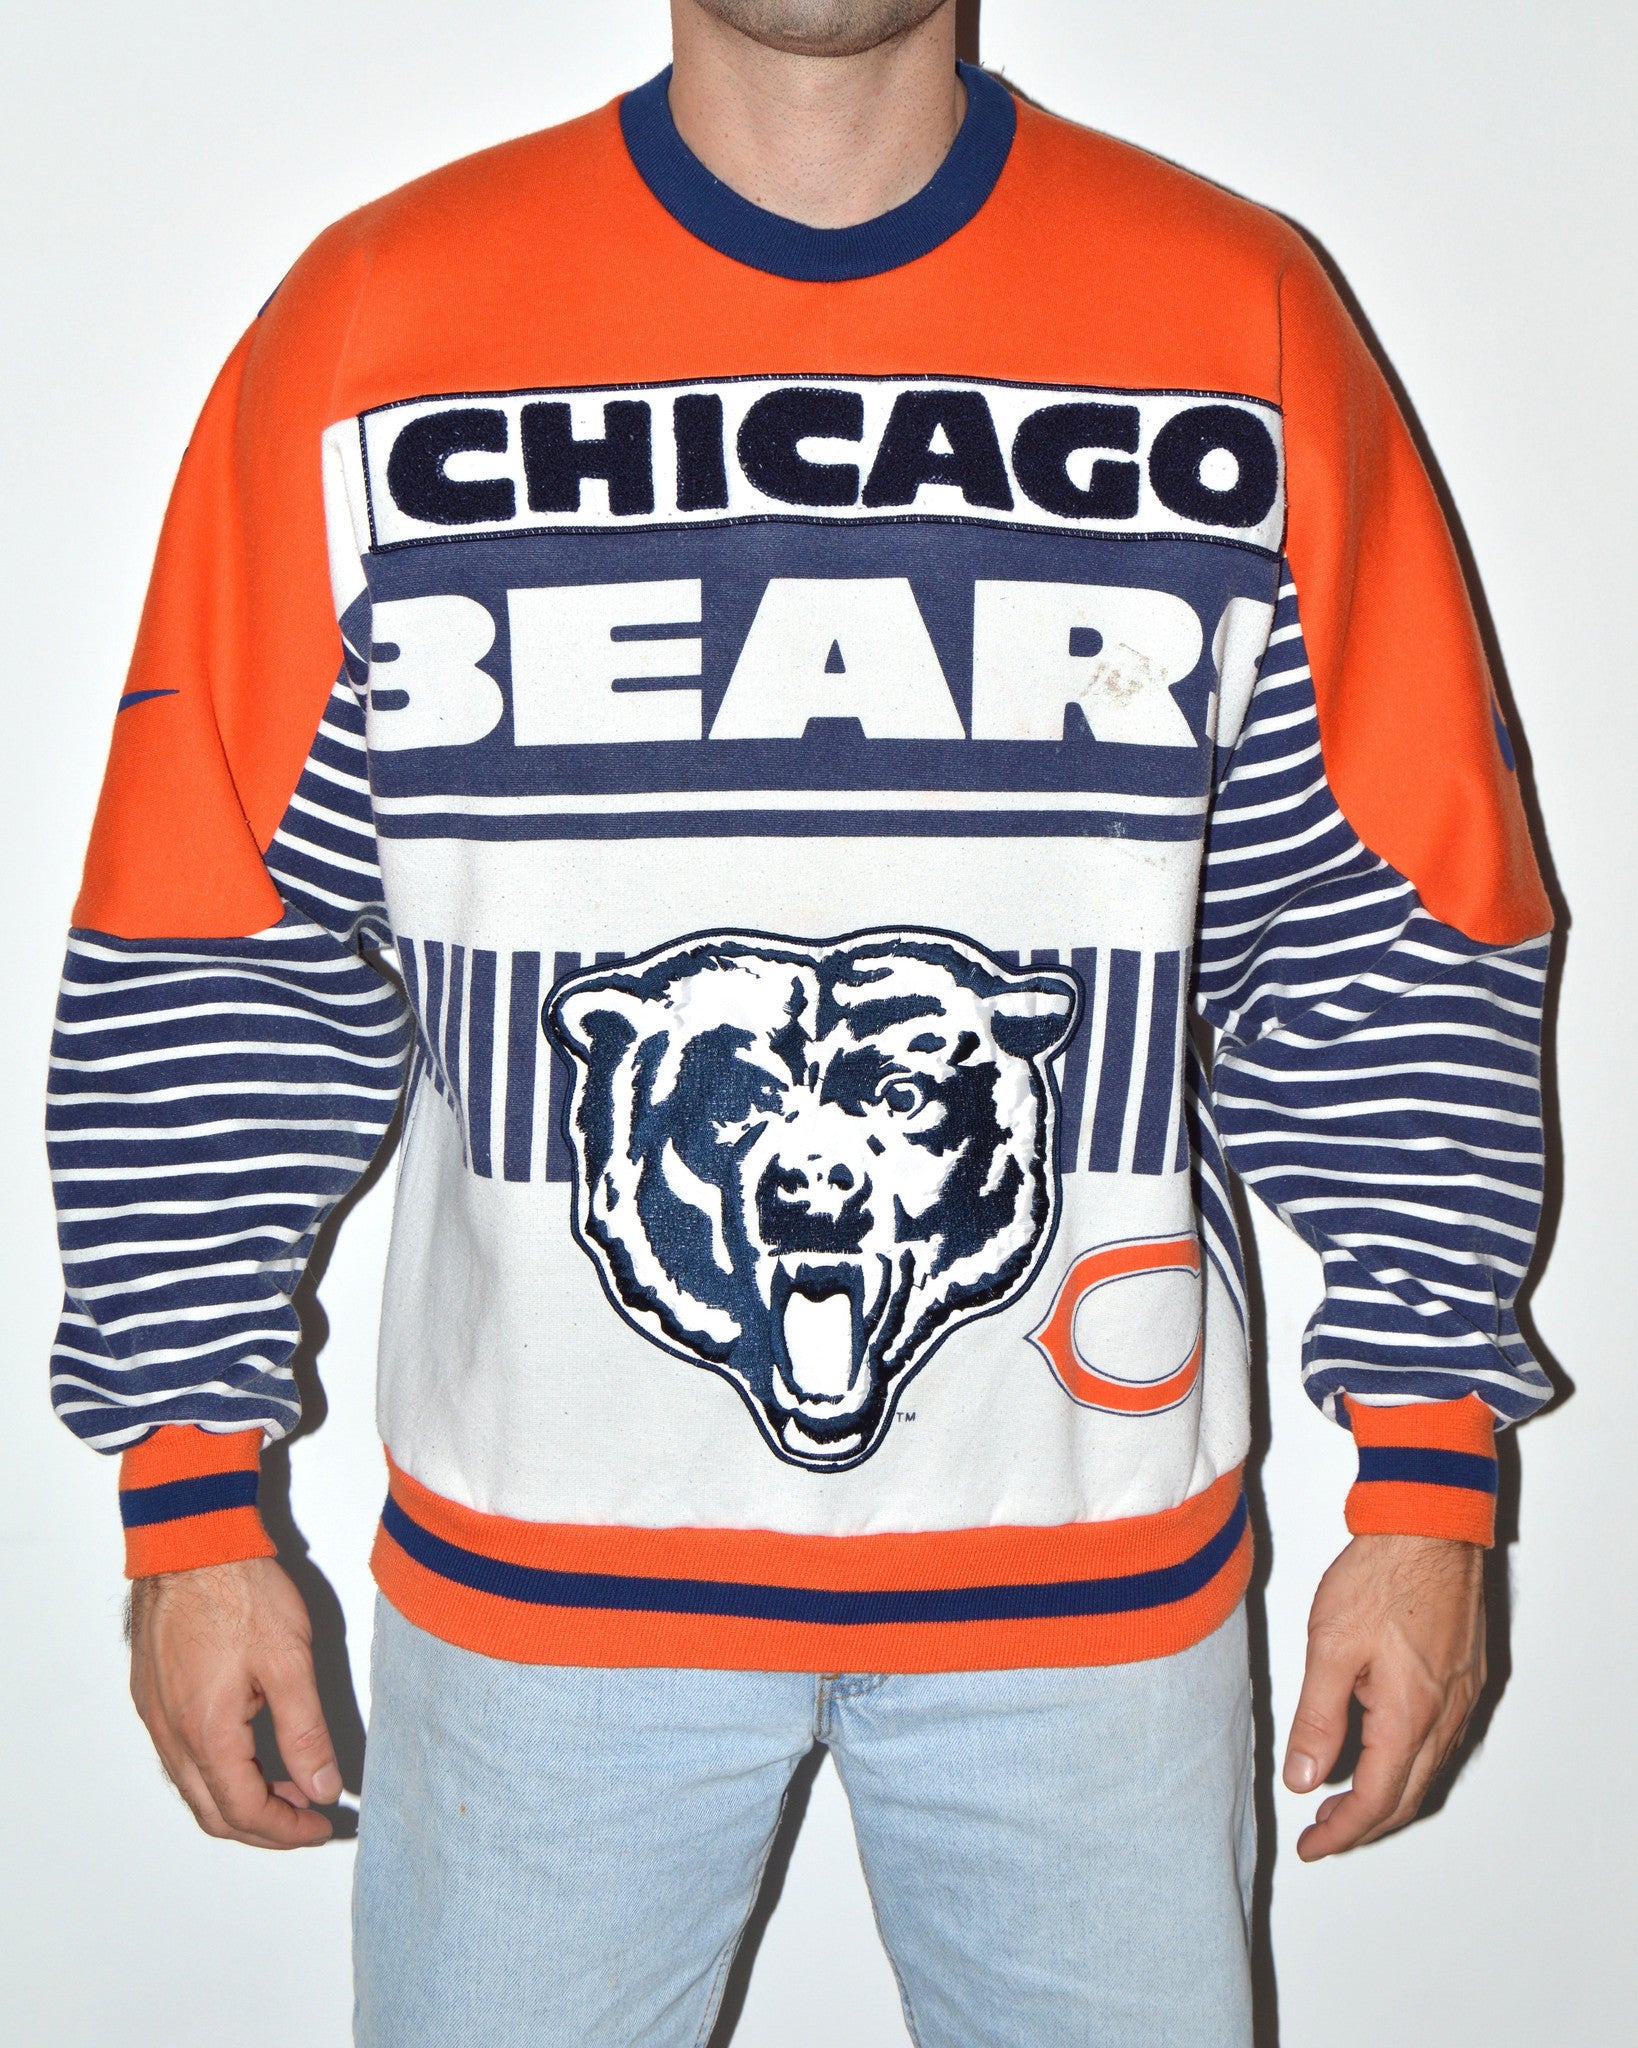 Vintage Nike Chicago Bears NFL Sweatshirt sz L